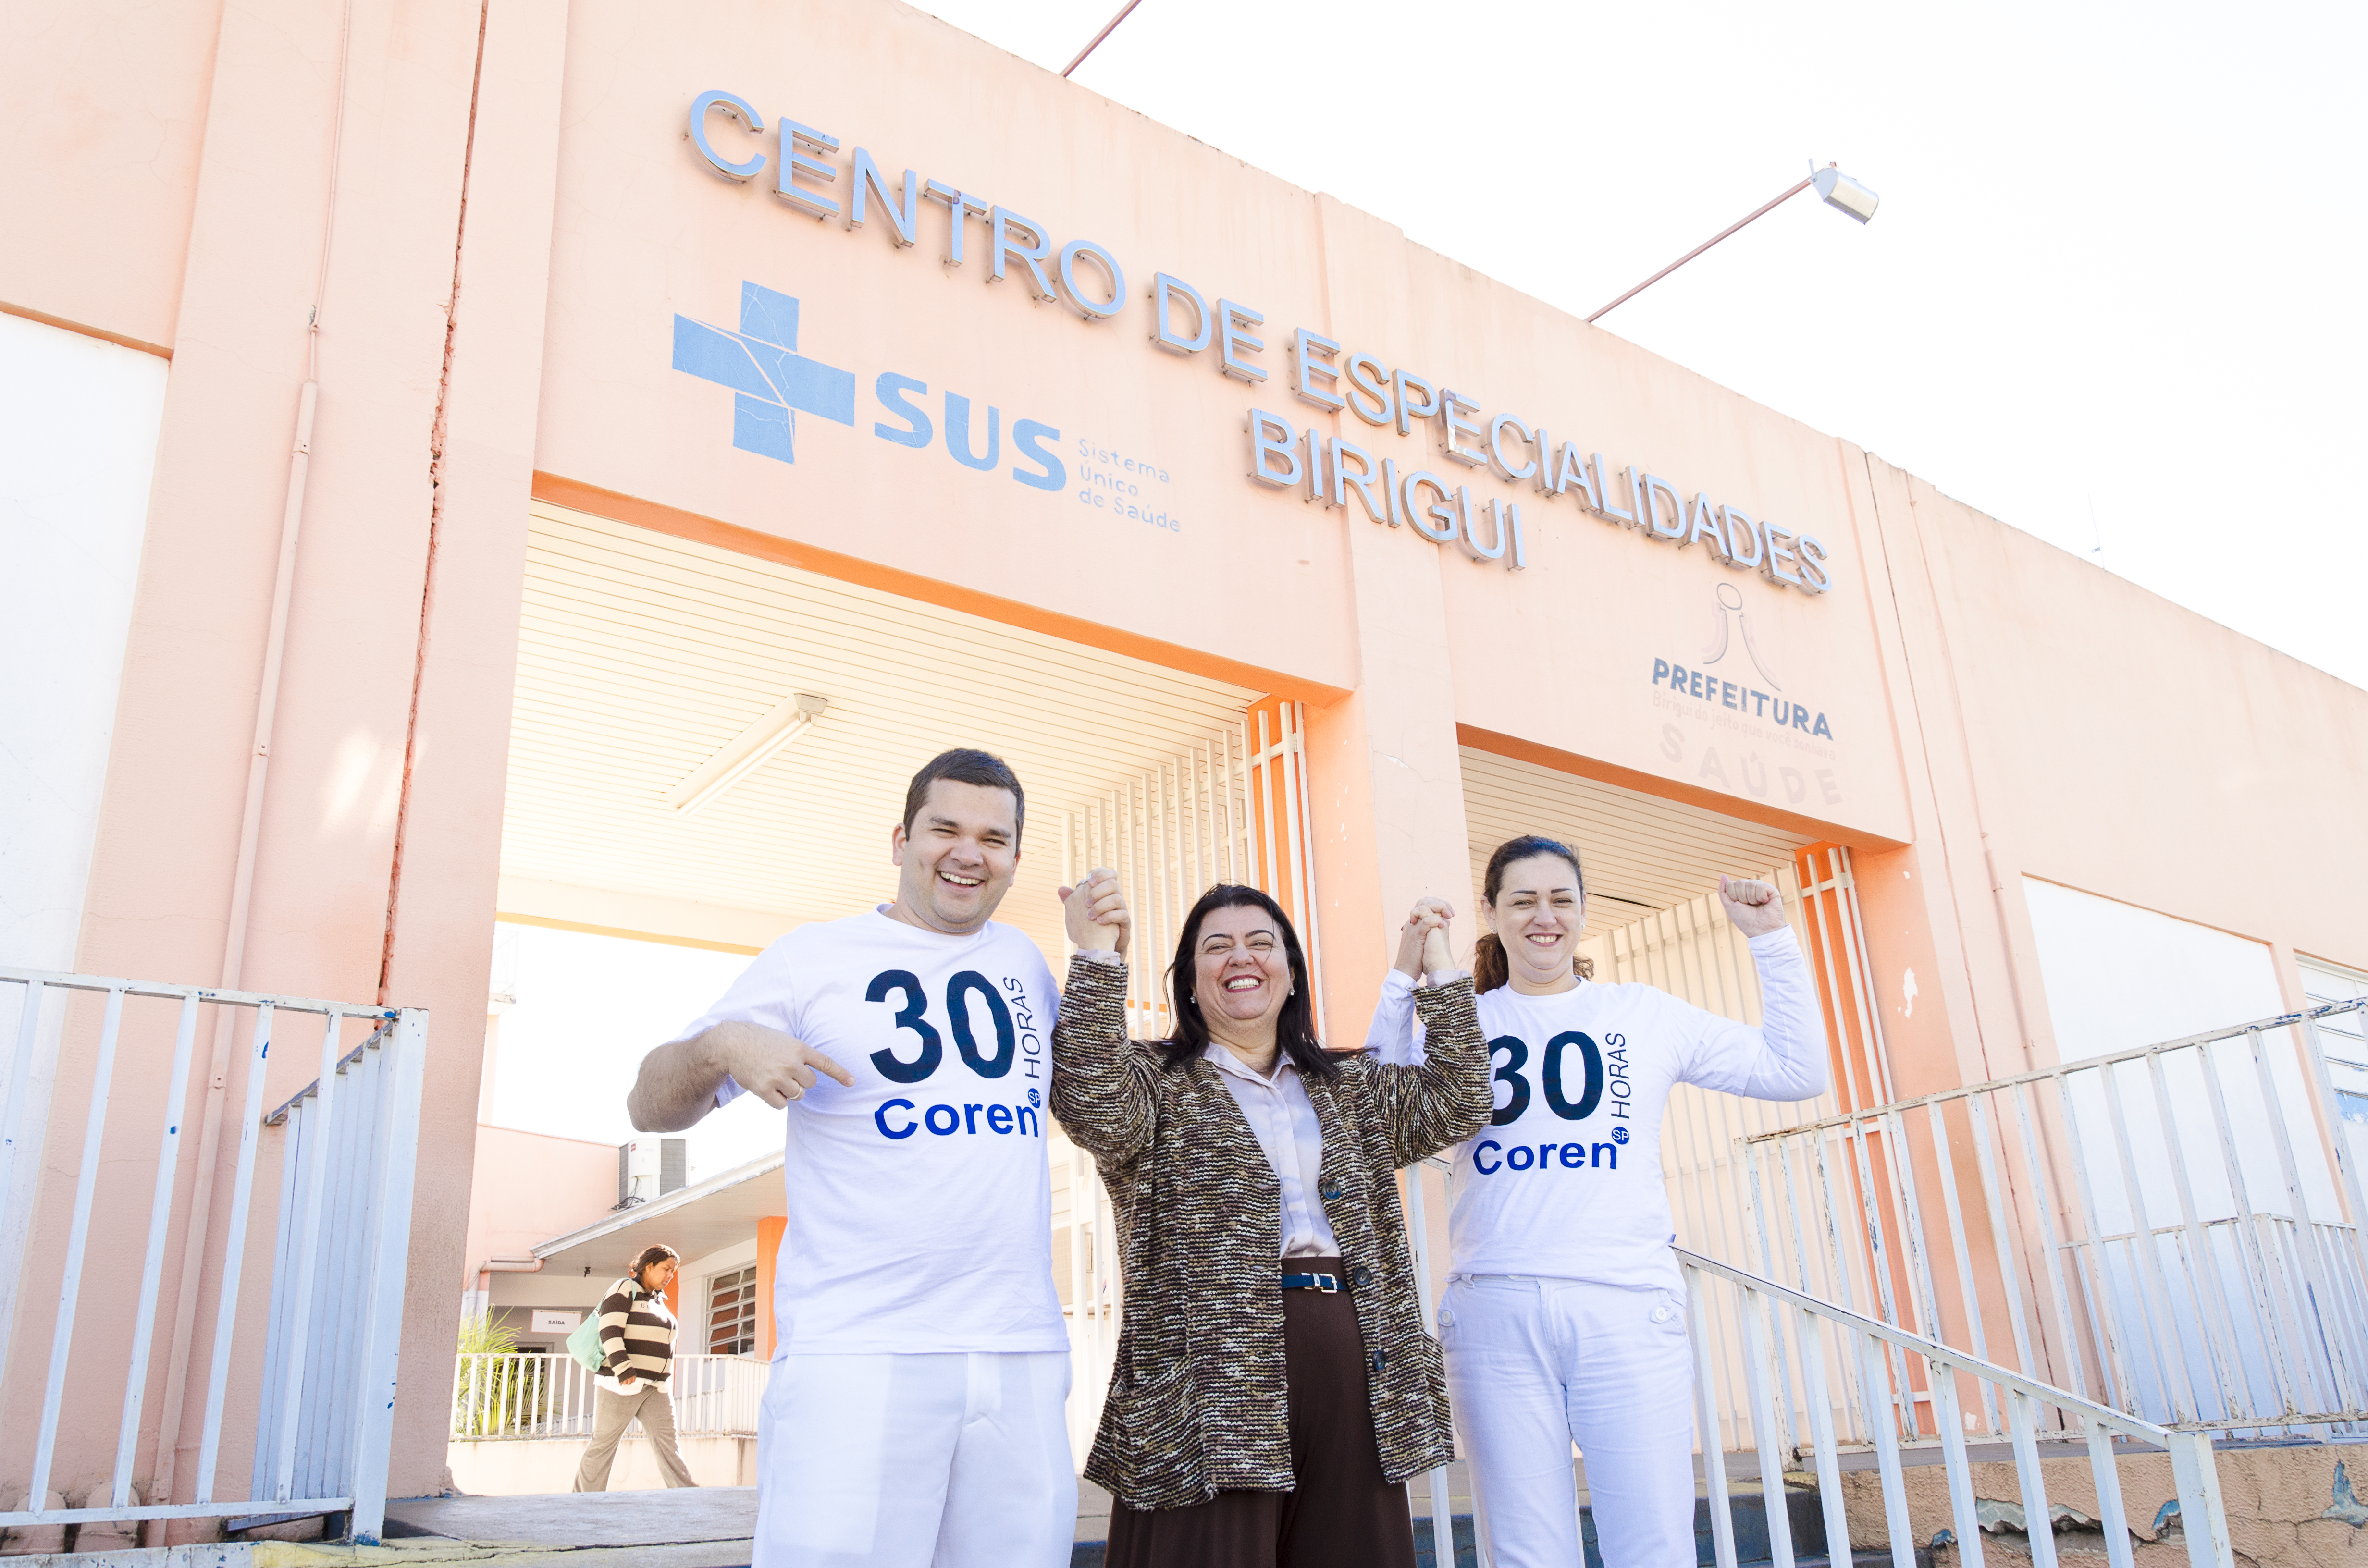 Os técnicos de Enfermagem de Birigui, Gilson Luiz Bazzão e Roseli de Souza Delgrande ao lado da enfermeira e secretária de Saúde, Andrea Boaventura Antonio